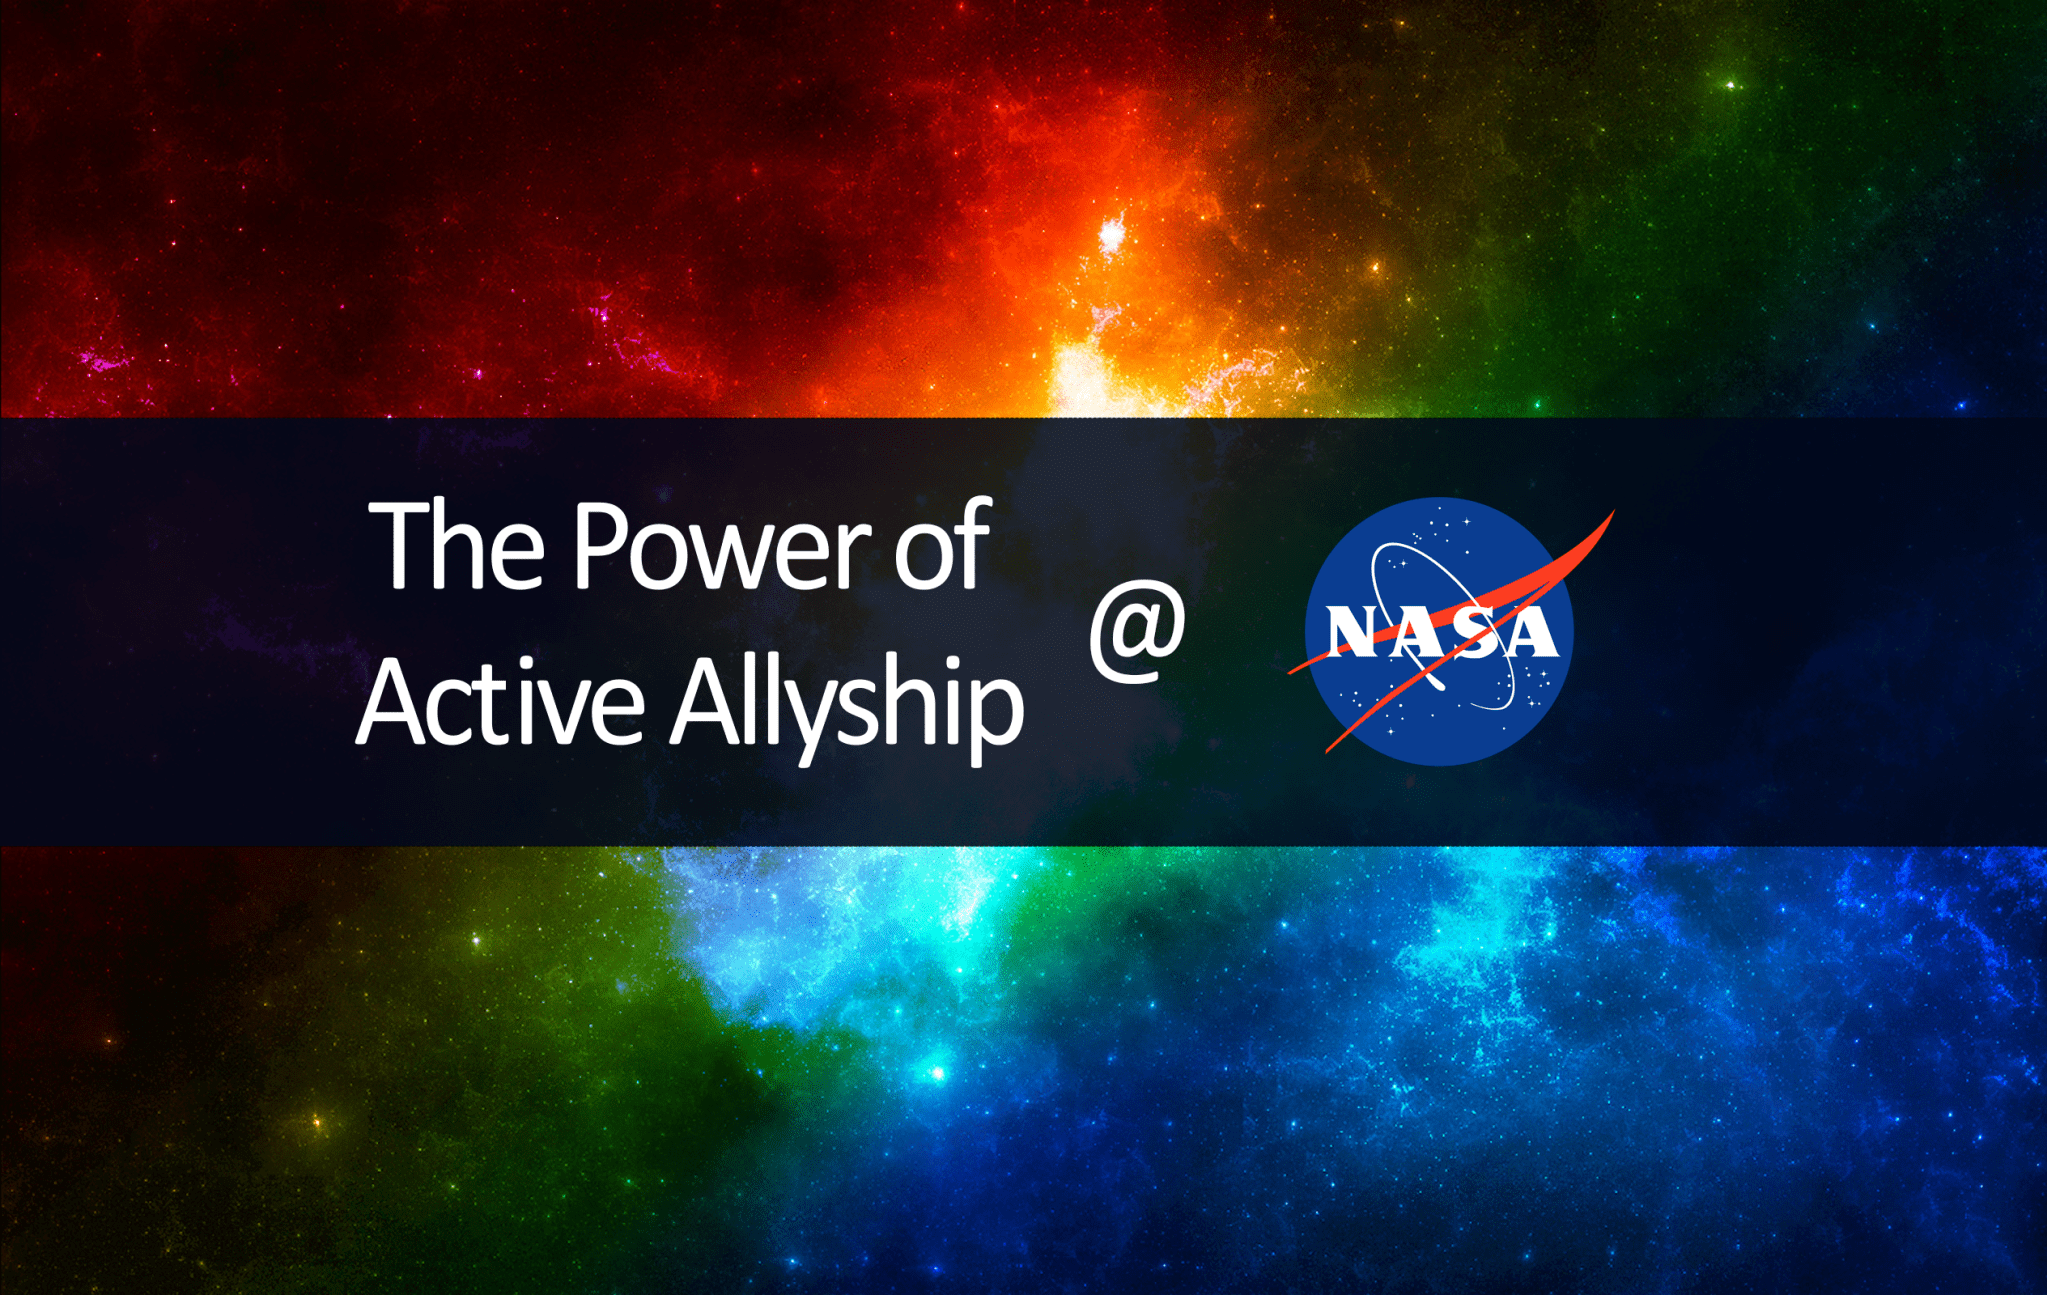 The Power of Active Allyship @ NASA graphic.